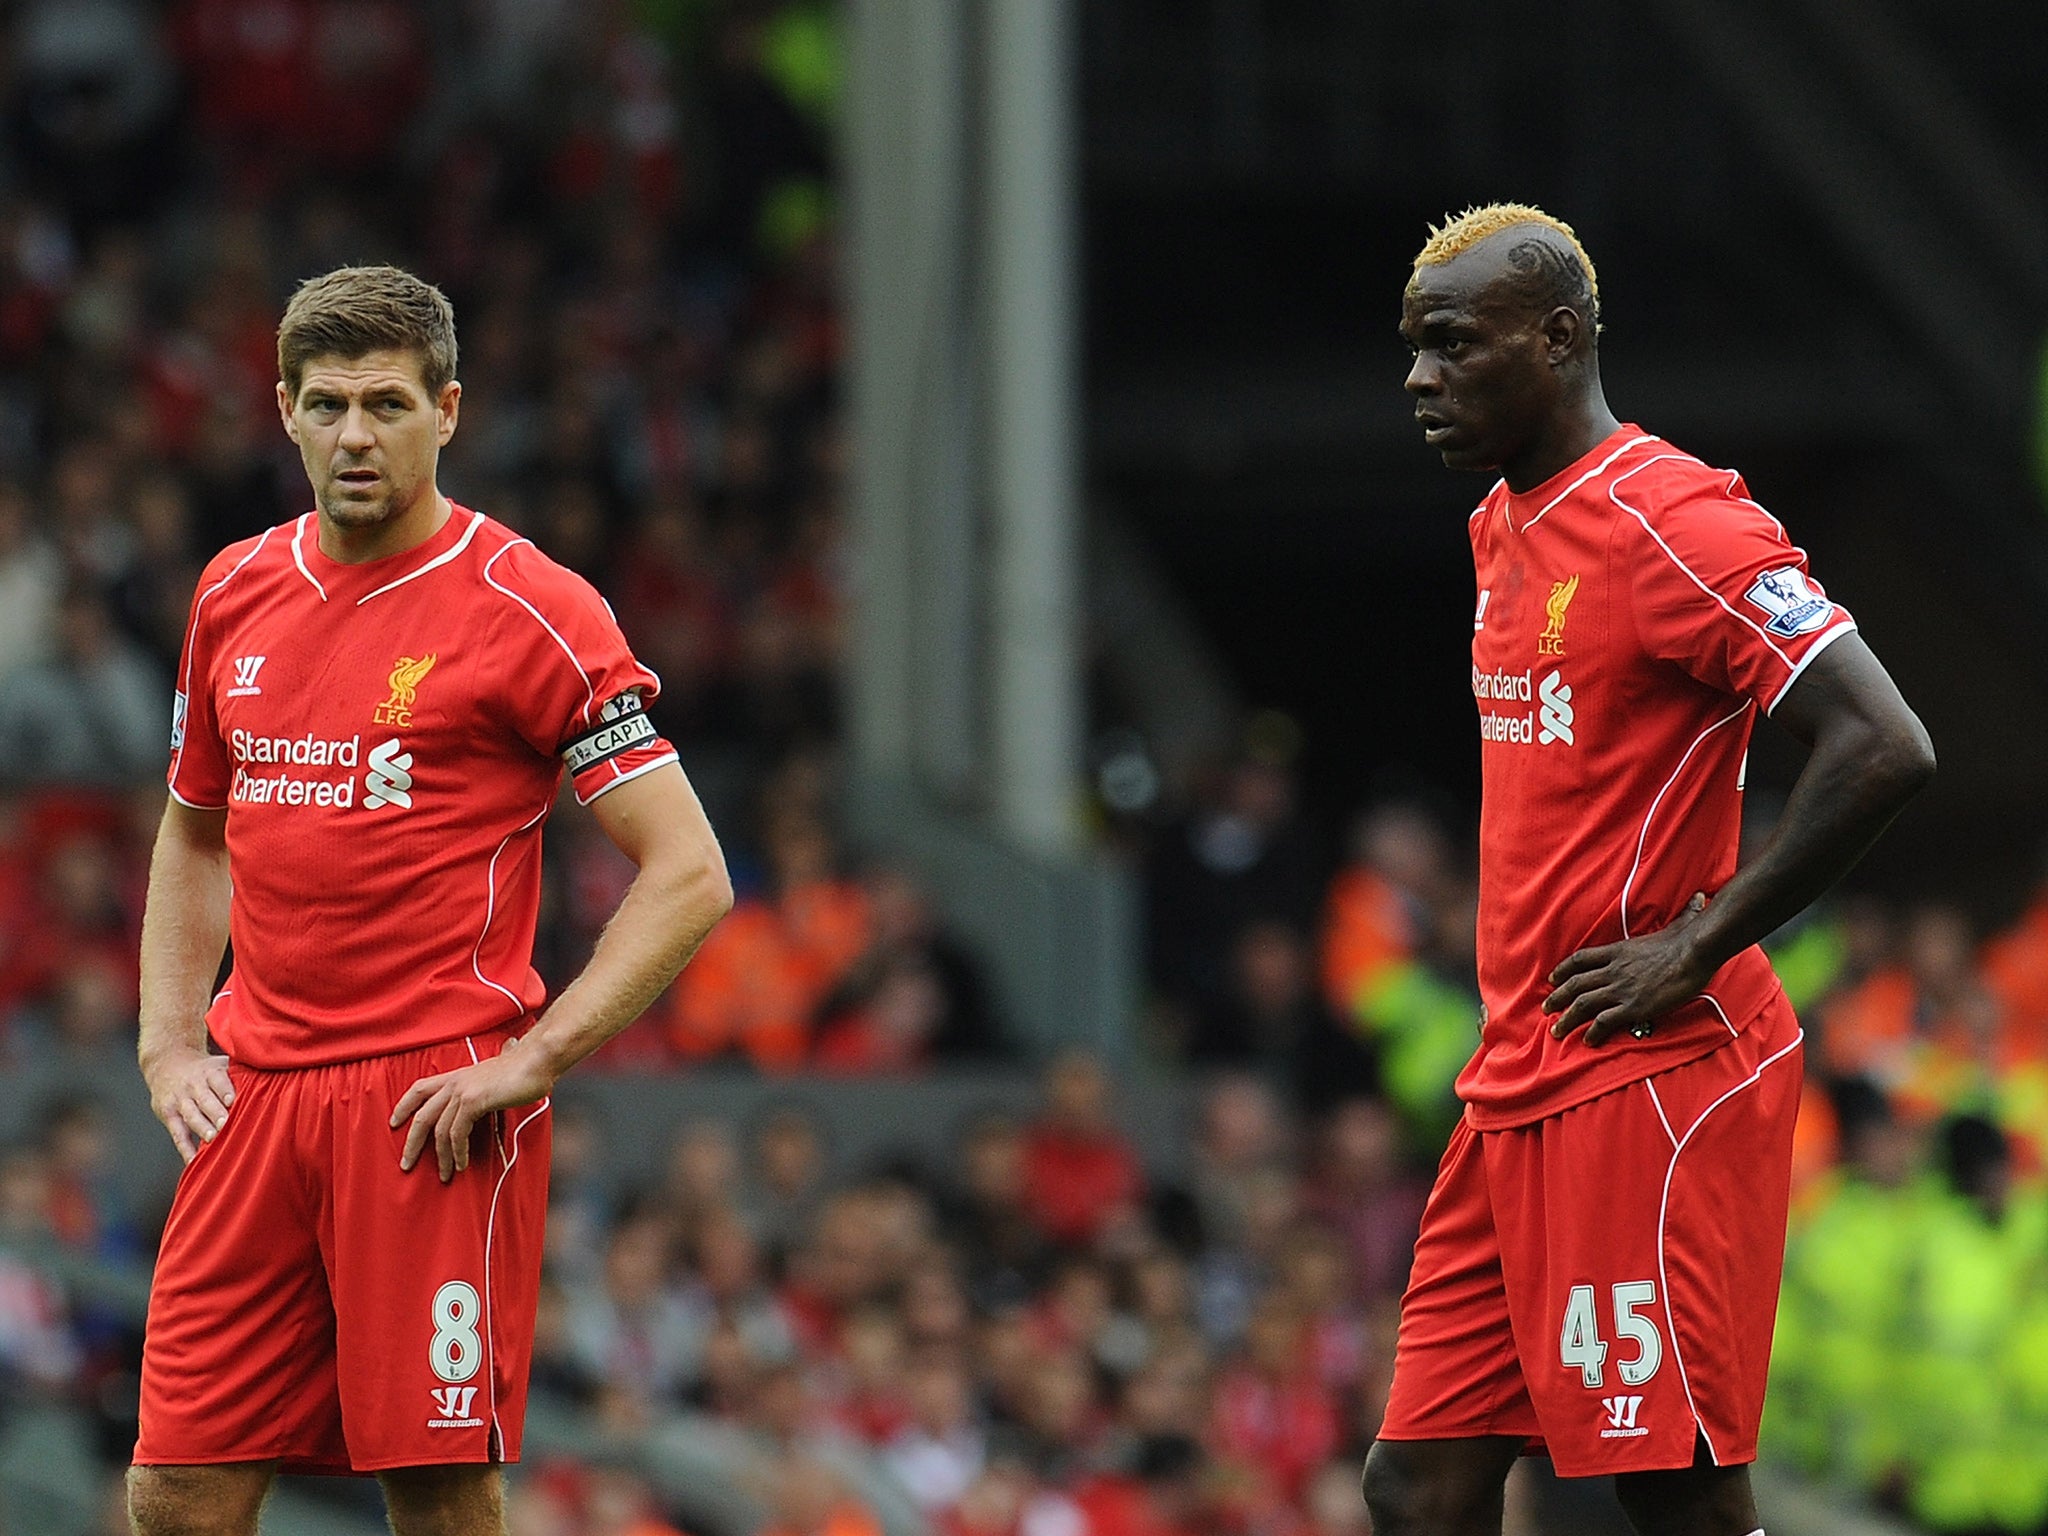 Steven Gerrard and Mario Balotelli pictured at Liverpool last season